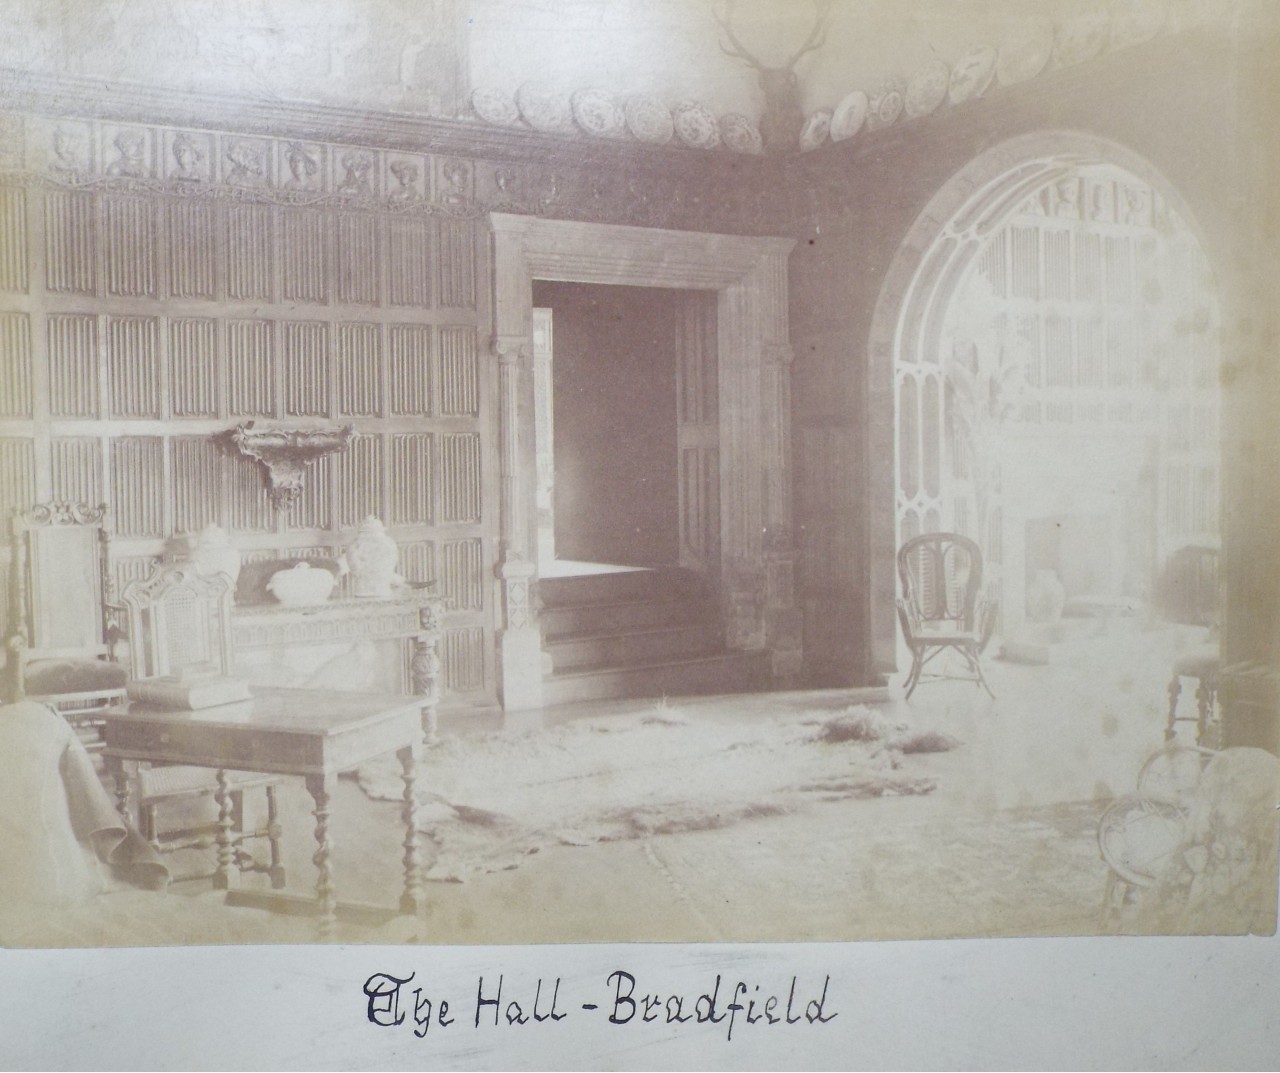 Photograph - The Hall - Bradfield